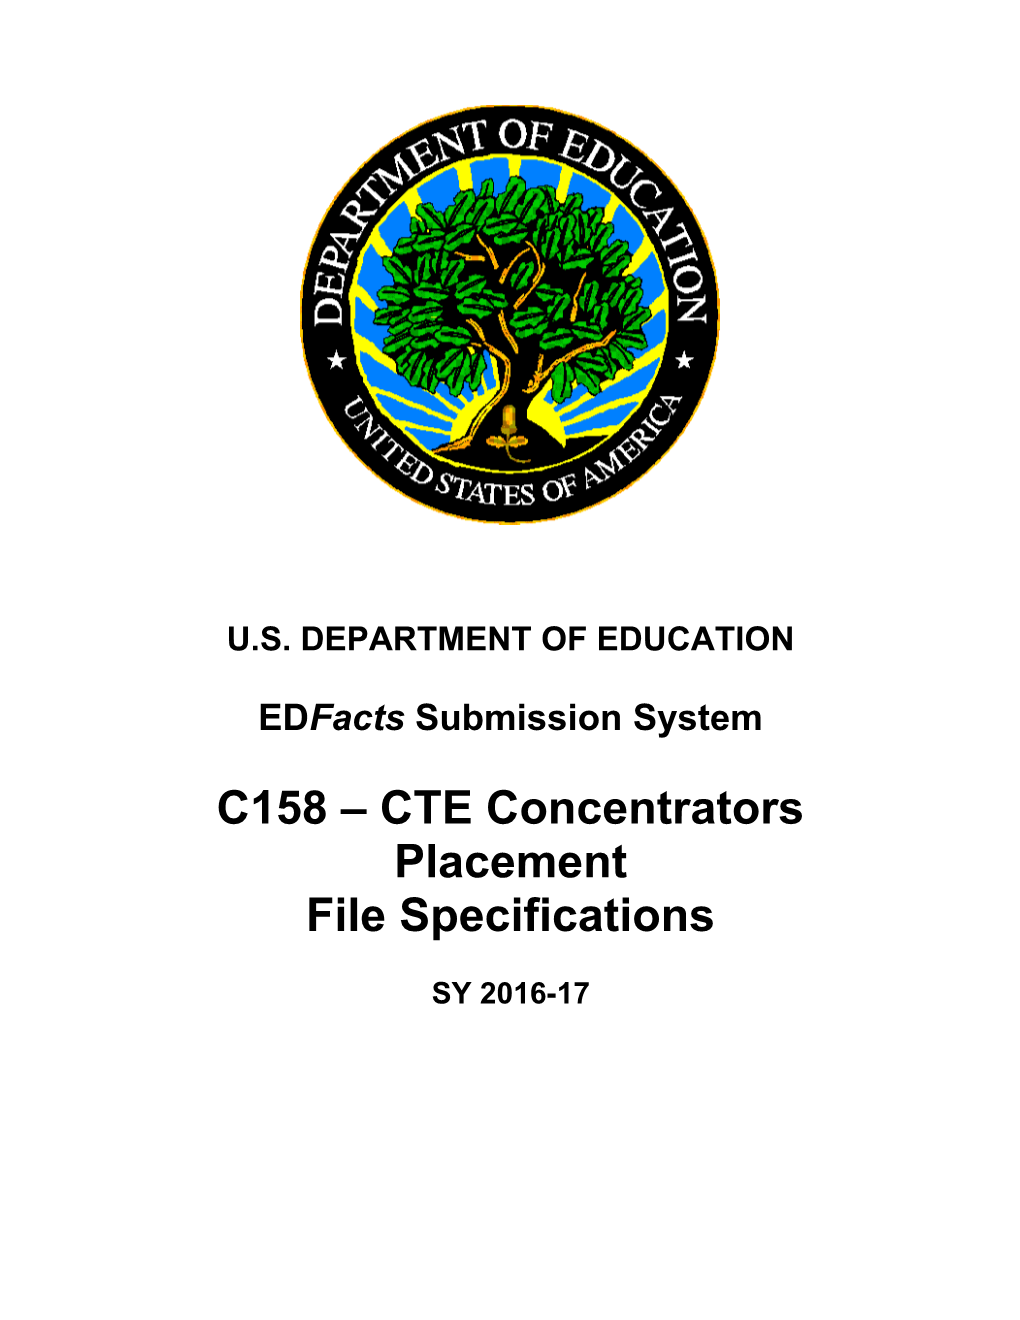 C158 - CTE Concentrators Placement File Specifications (Msword)